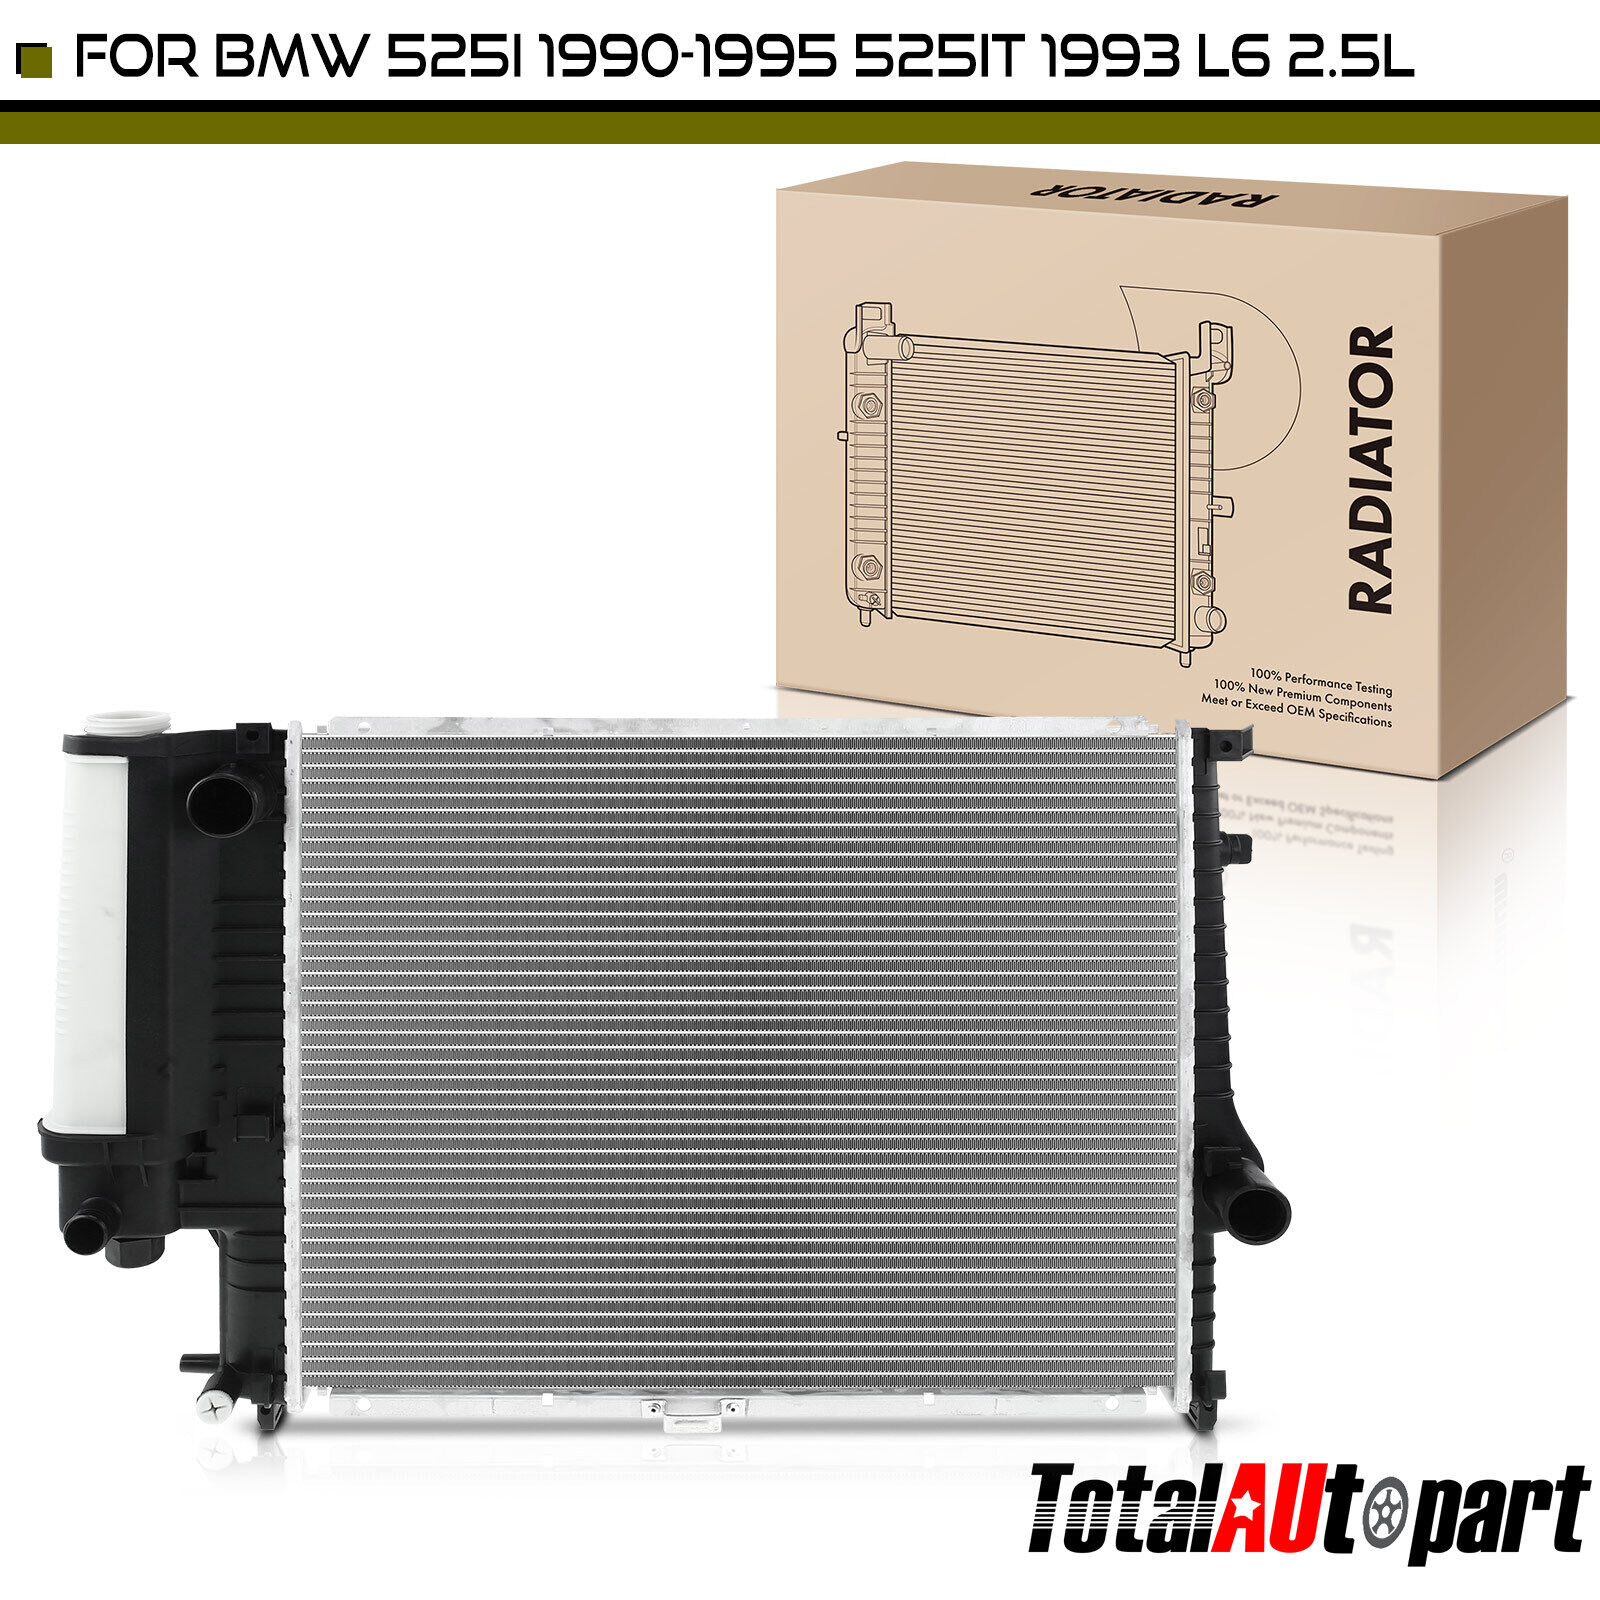 Radiator w/o Oil Cooler for BMW E34 525i 1990-1995 525iT 1993 2.5L 17111737760